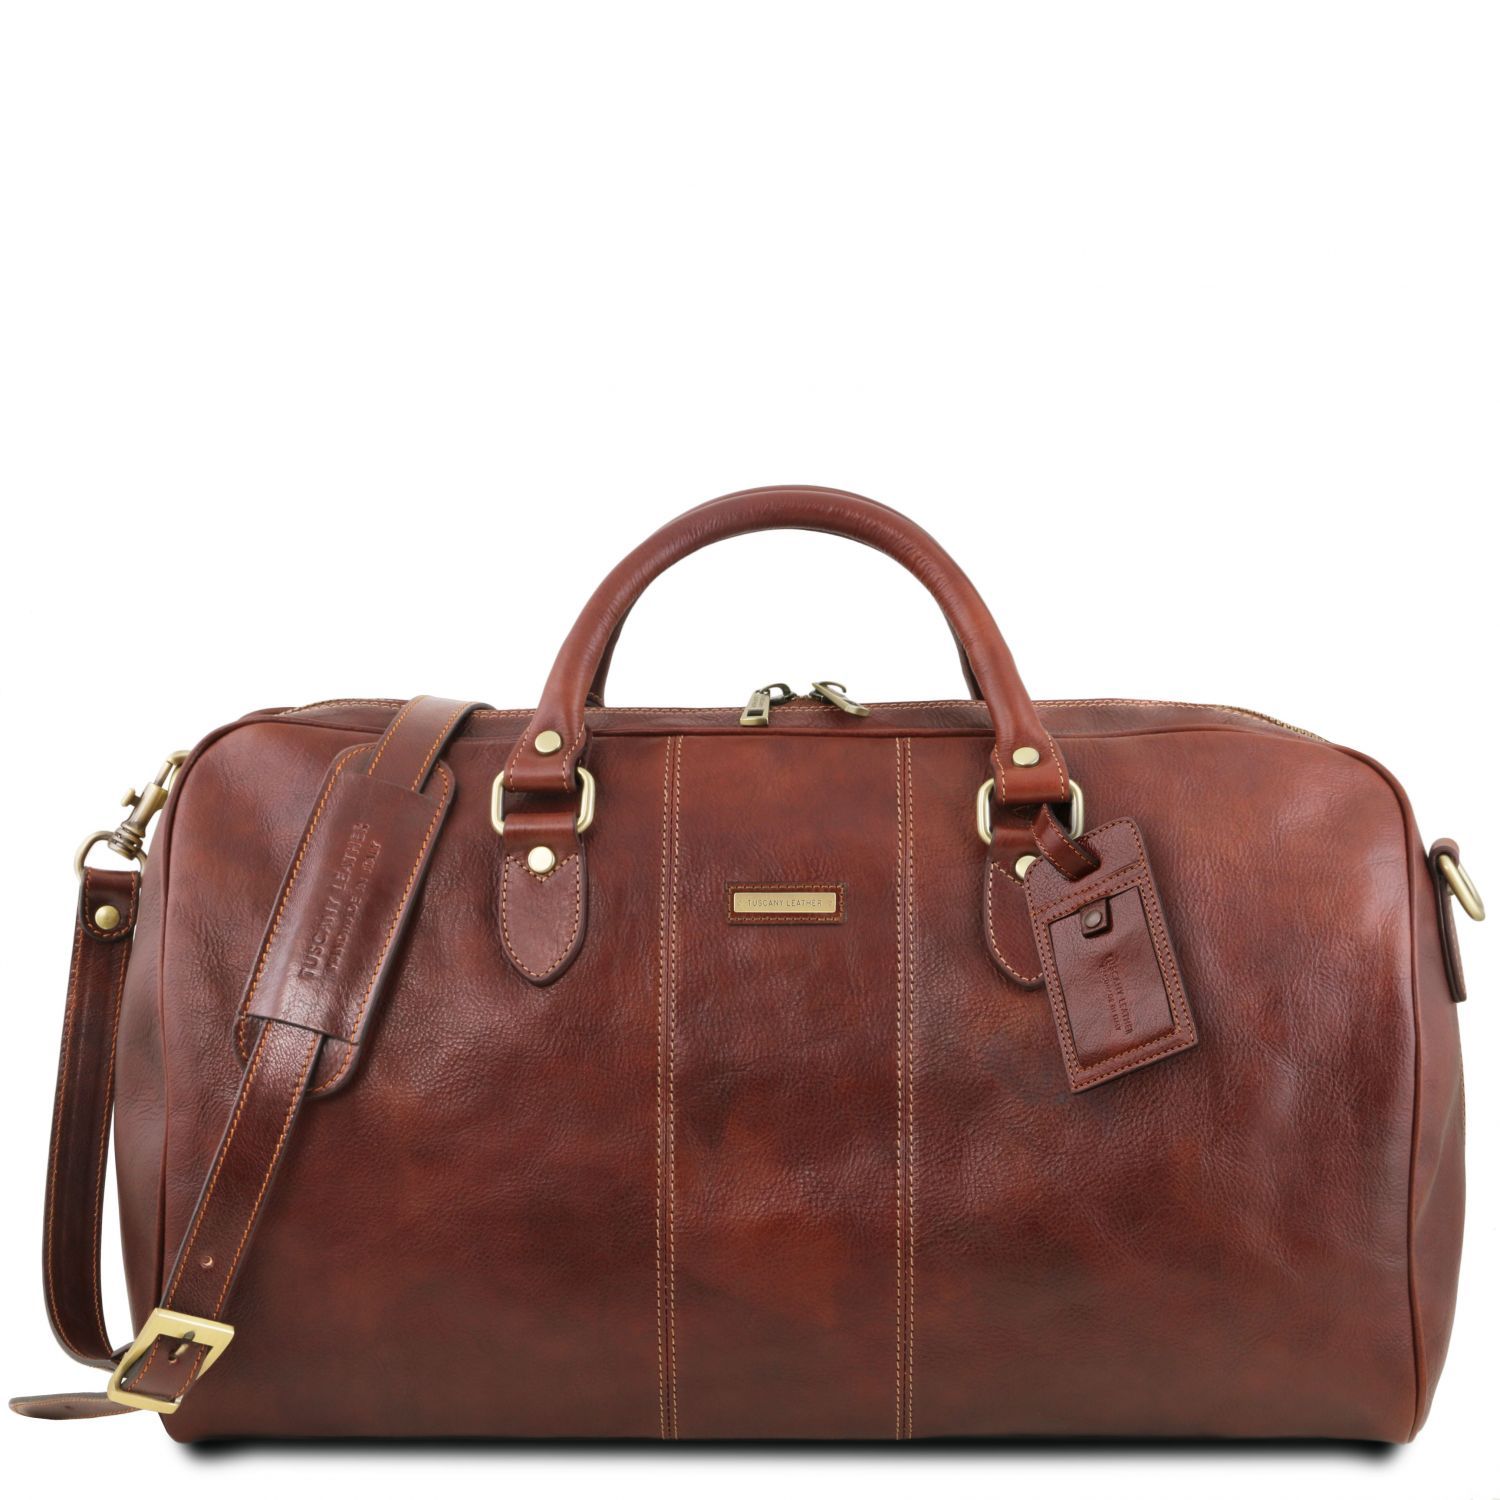 peanuts Price cut Establish Lisbona Travel Leather Duffle bag - Large Size Brown TL141657